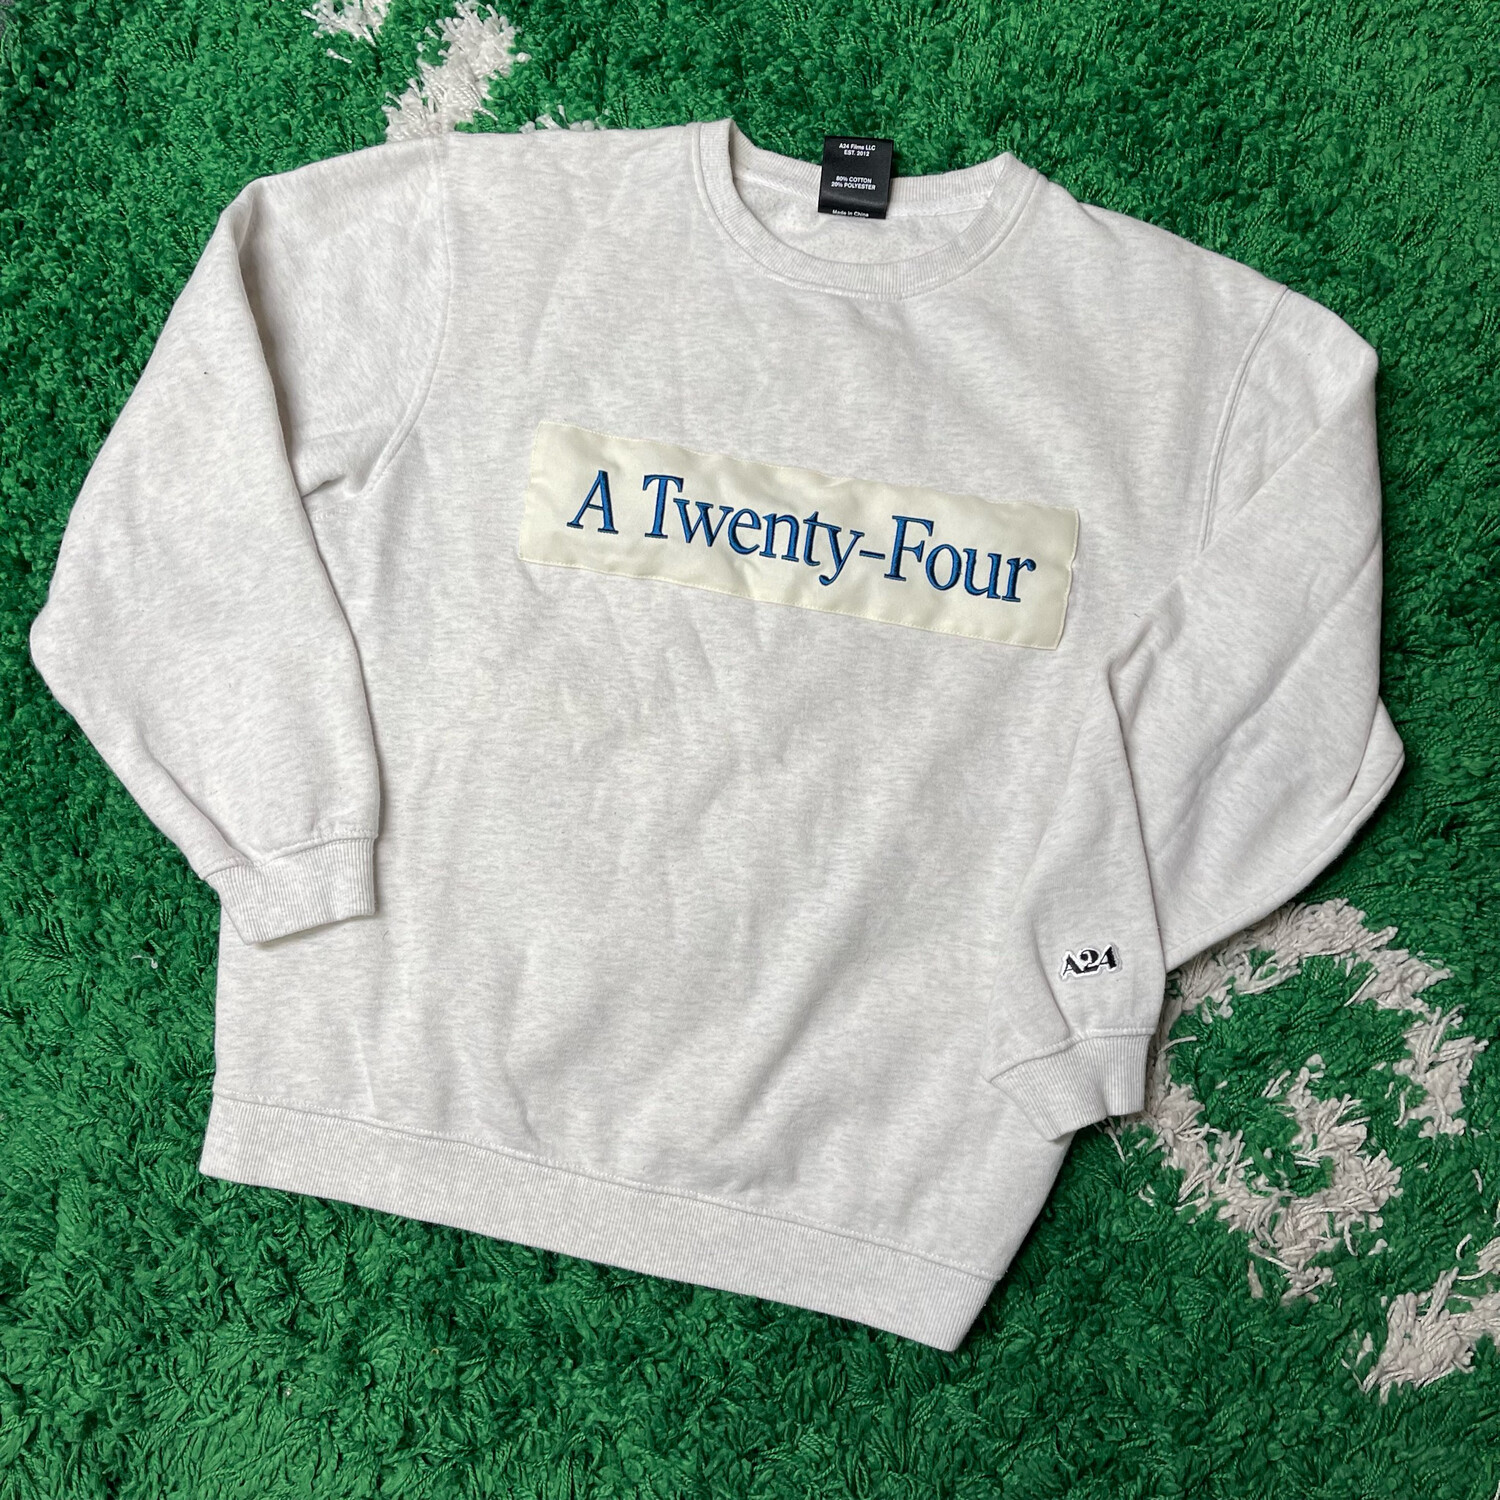 A24 Crewneck Sweatshirt Size Small